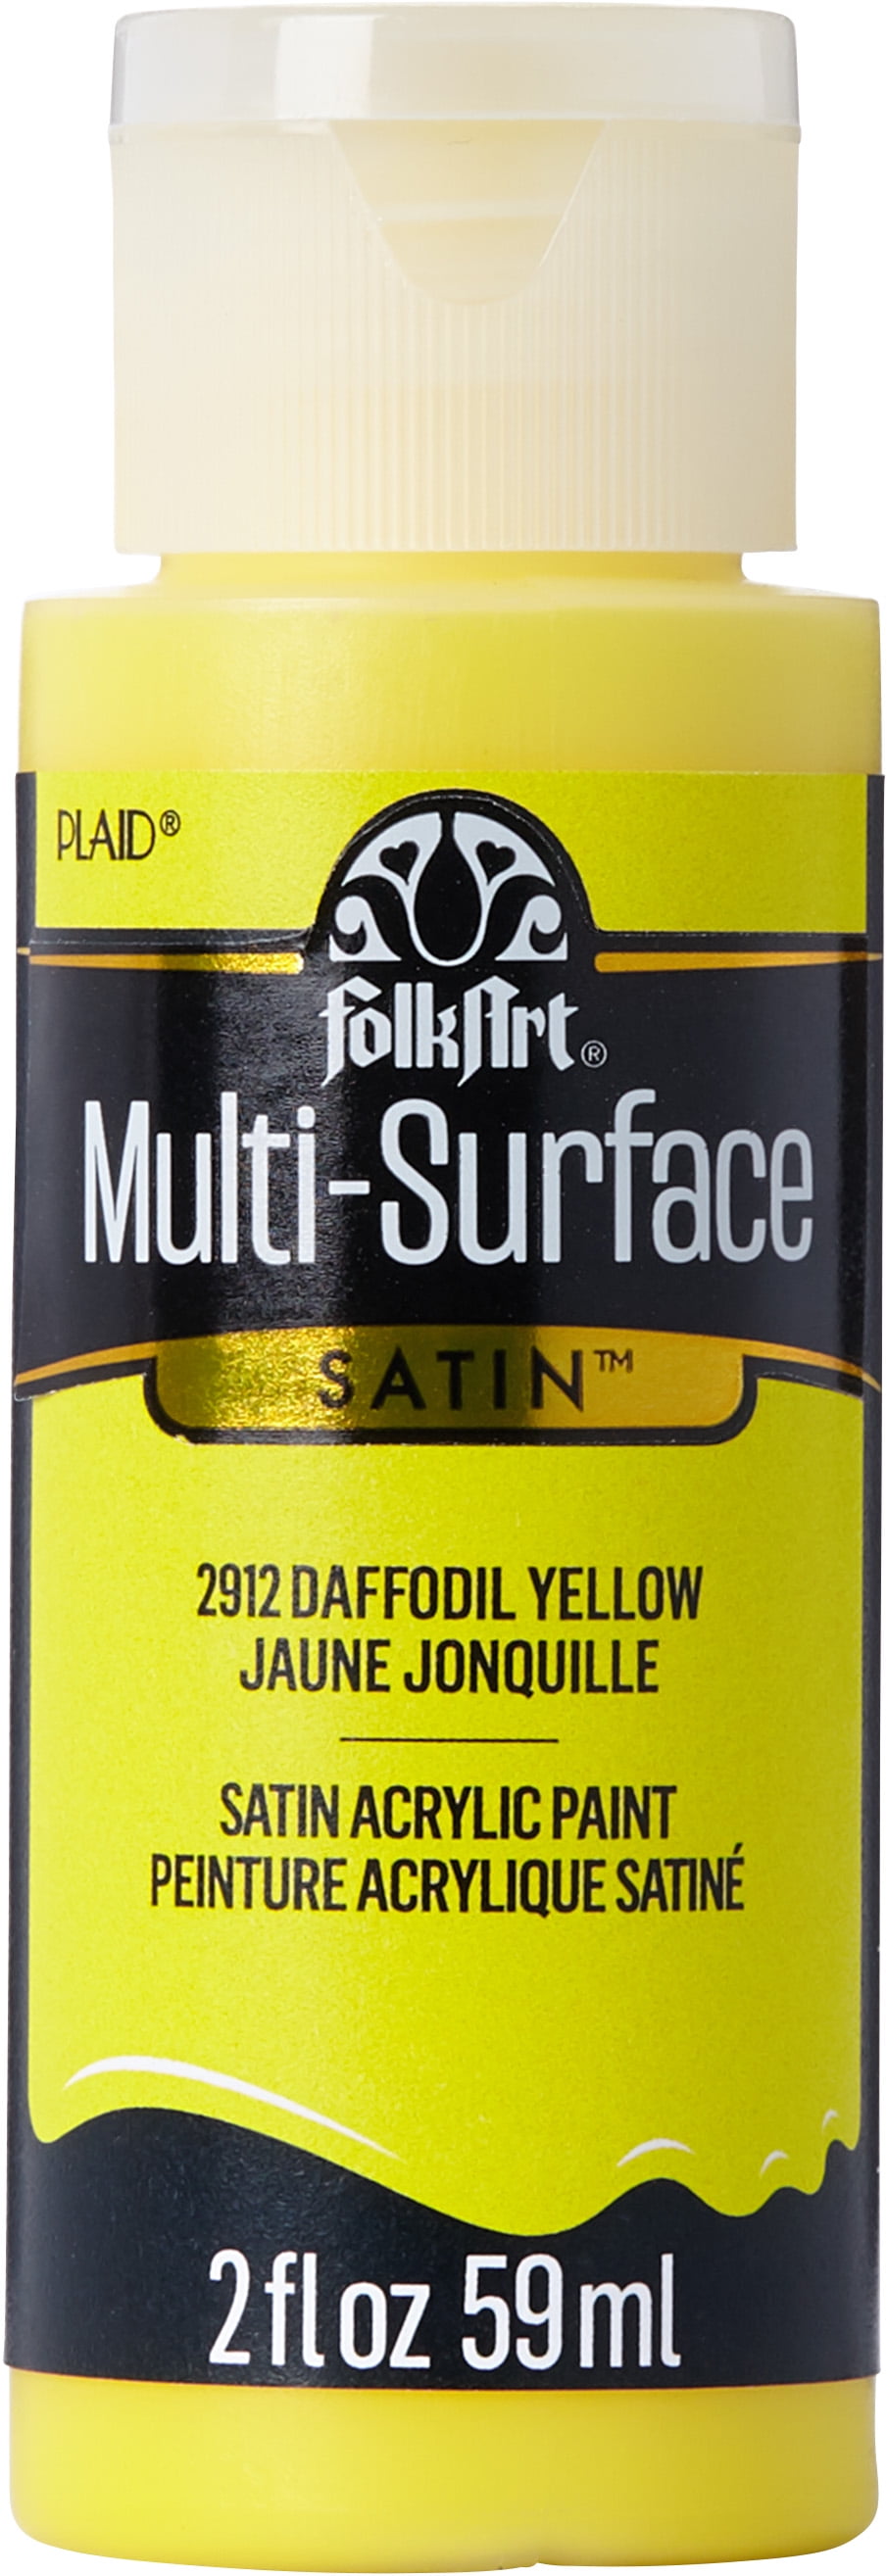 FolkArt Multi-Surface Satin Acrylic Paint - 16 fl oz